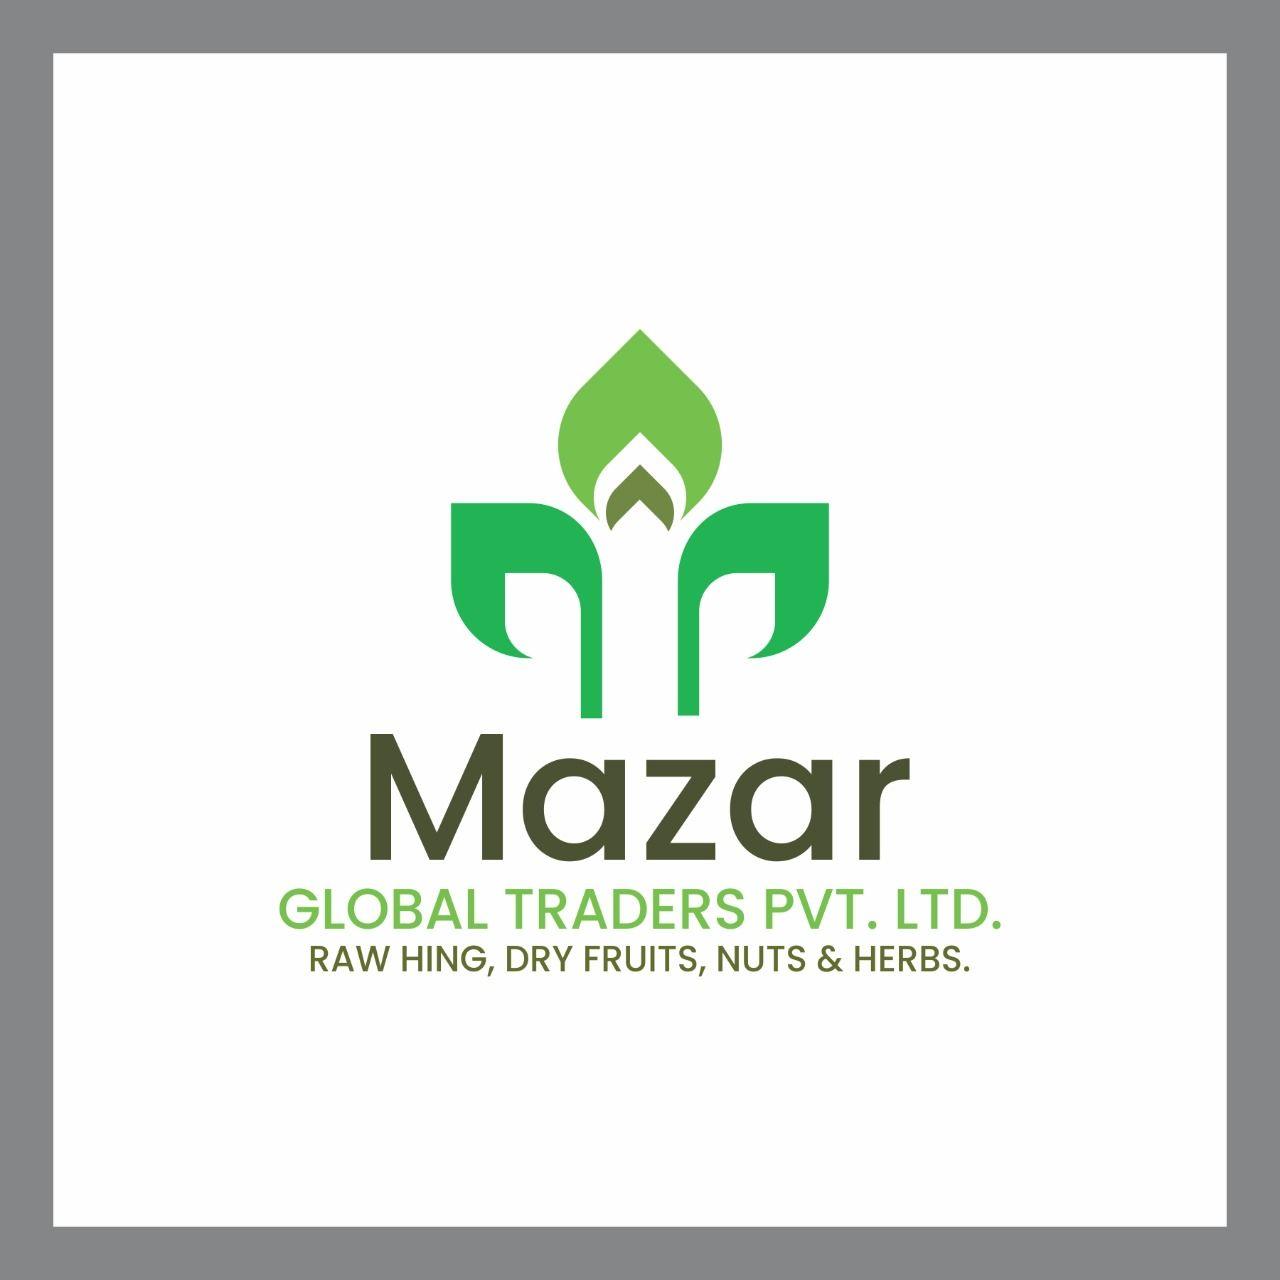 Mazar Global Traders